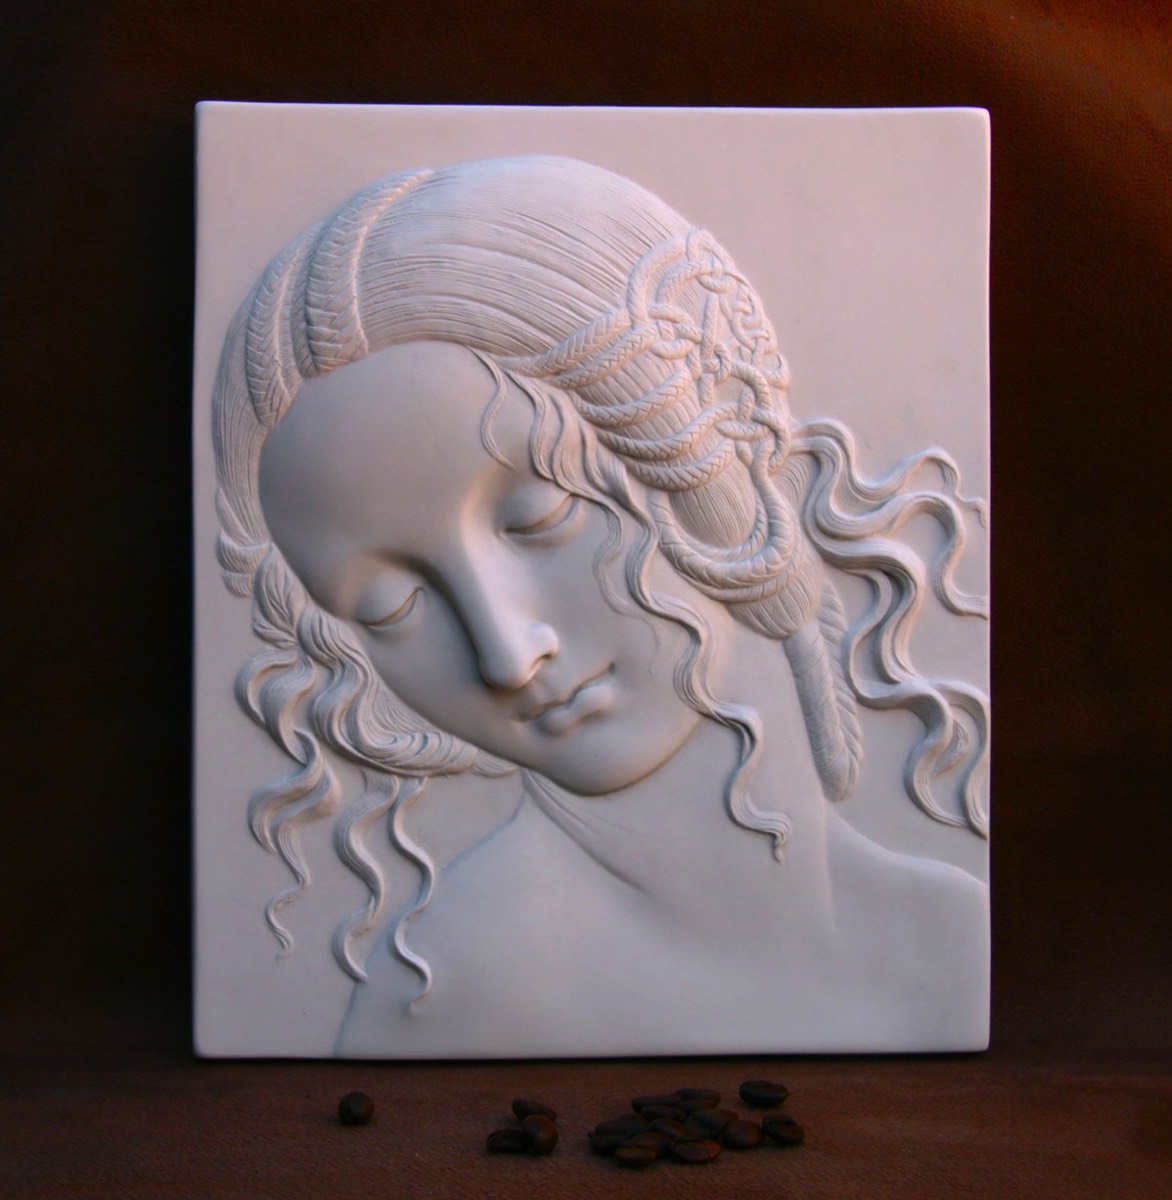 Purchase Hed of Leda plaque by Leonardo Da Vinci, handmade from British Plaster by The Modern Souvenir Company.